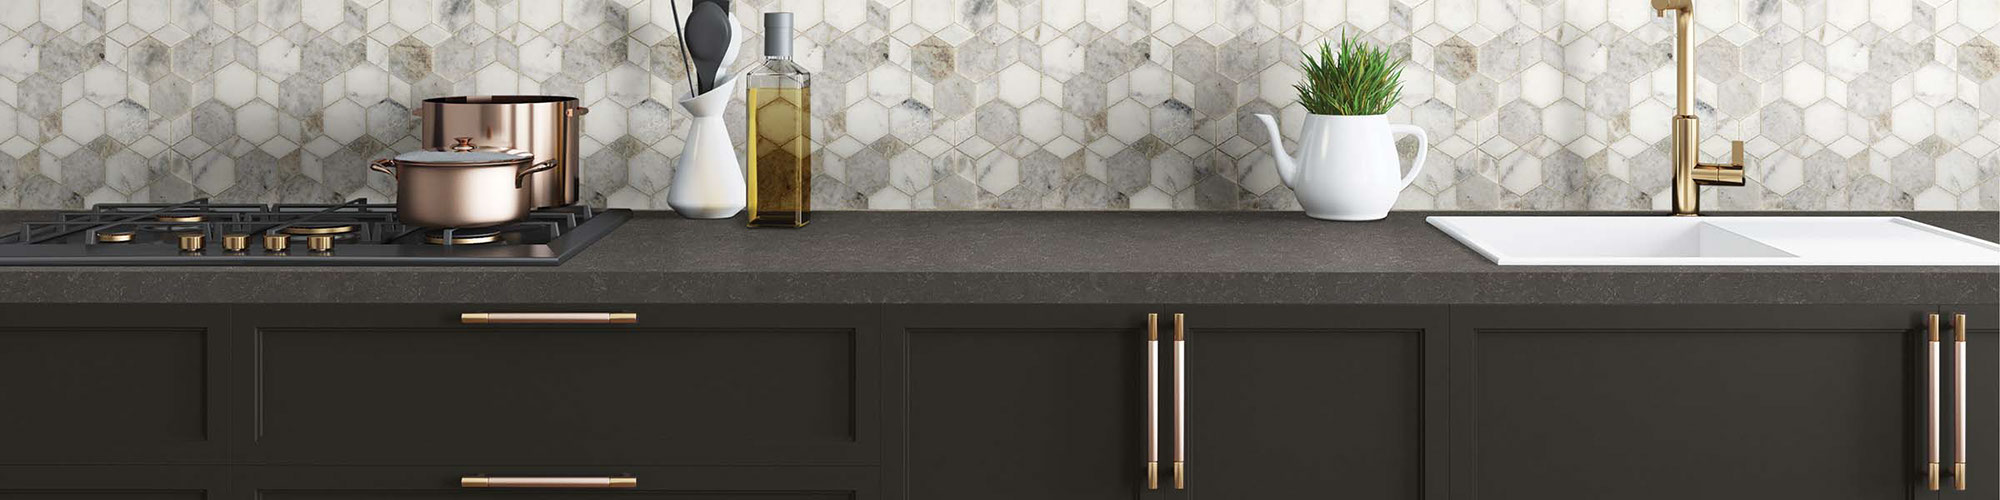 Kitchen white & gray marble mosaic backsplash with black & brass gas stove, dark brown quartz countertop and cabinets.